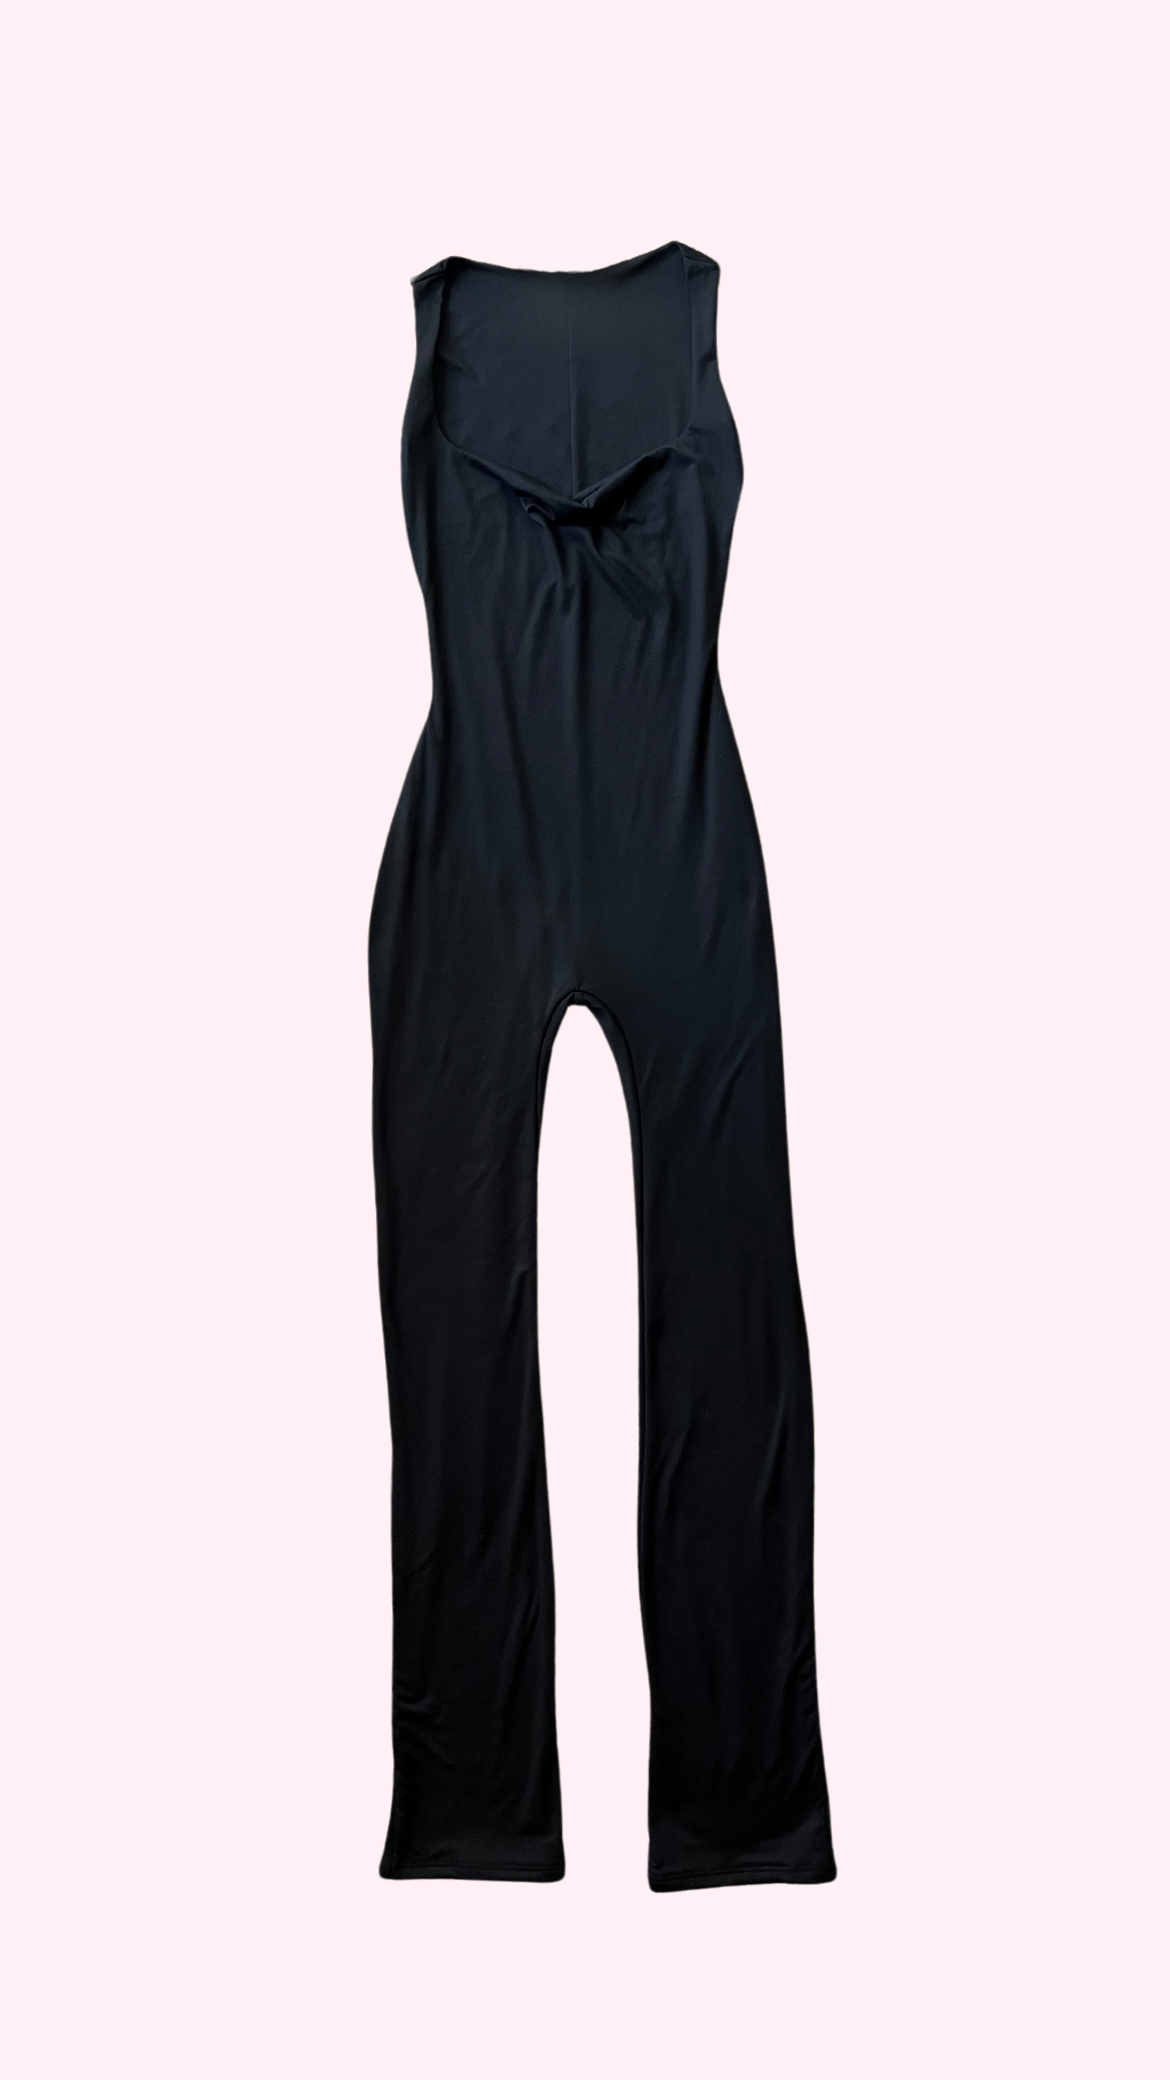 BLACK Sleeveless Jumpsuit Square Neckline Slip On/No Zipper Double Layered